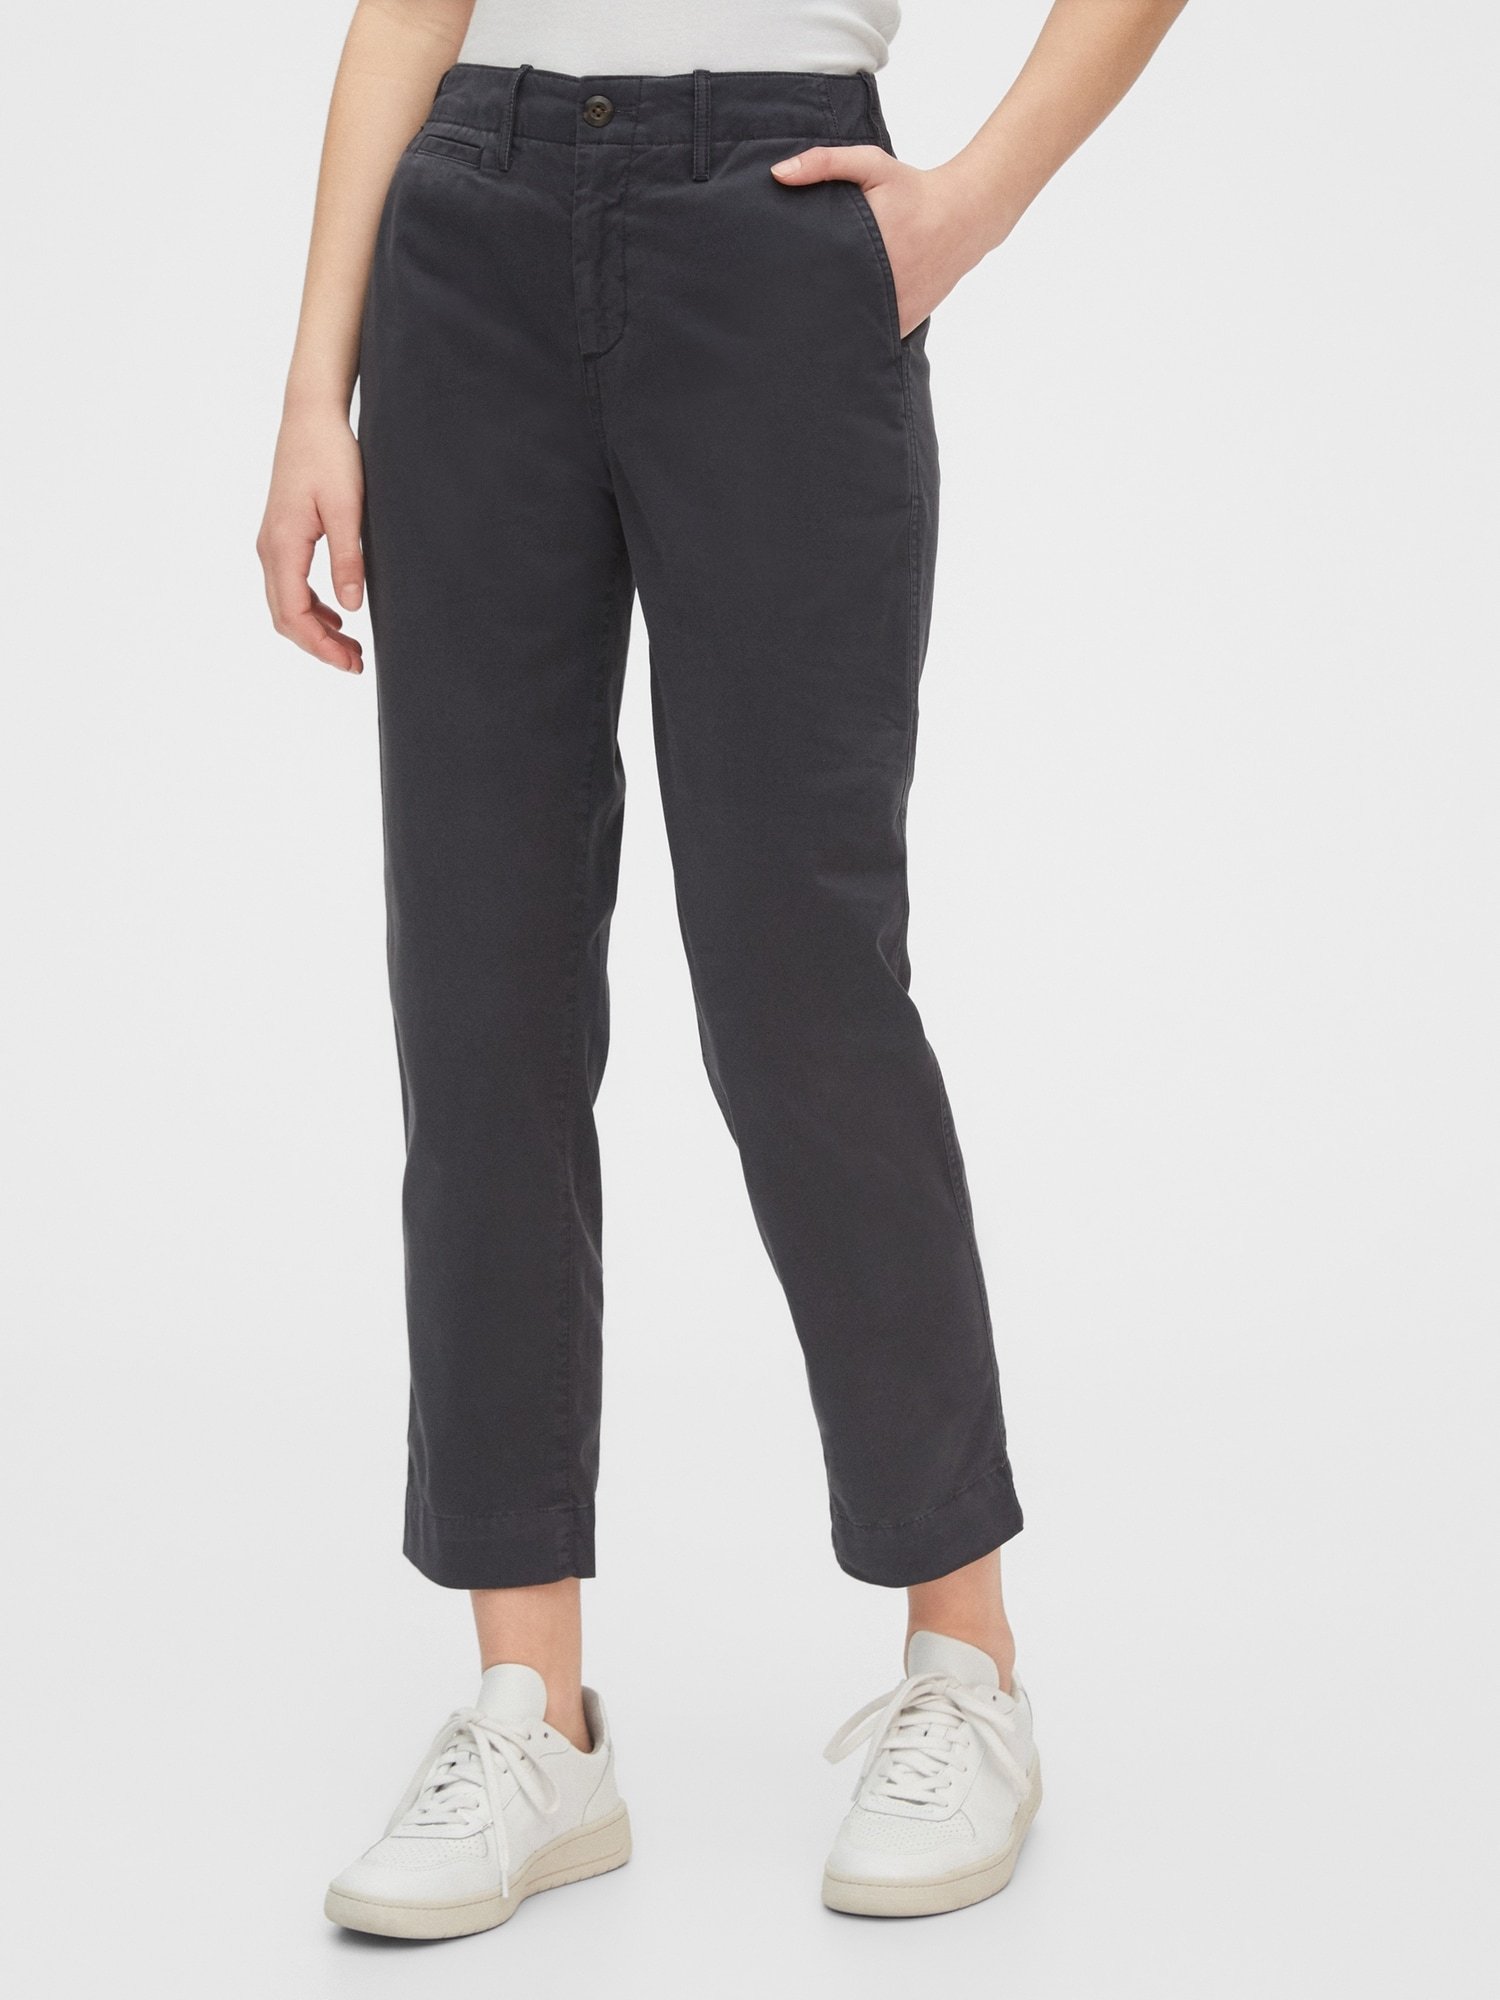 High Rise Straight Fit Khaki Pantolon product image